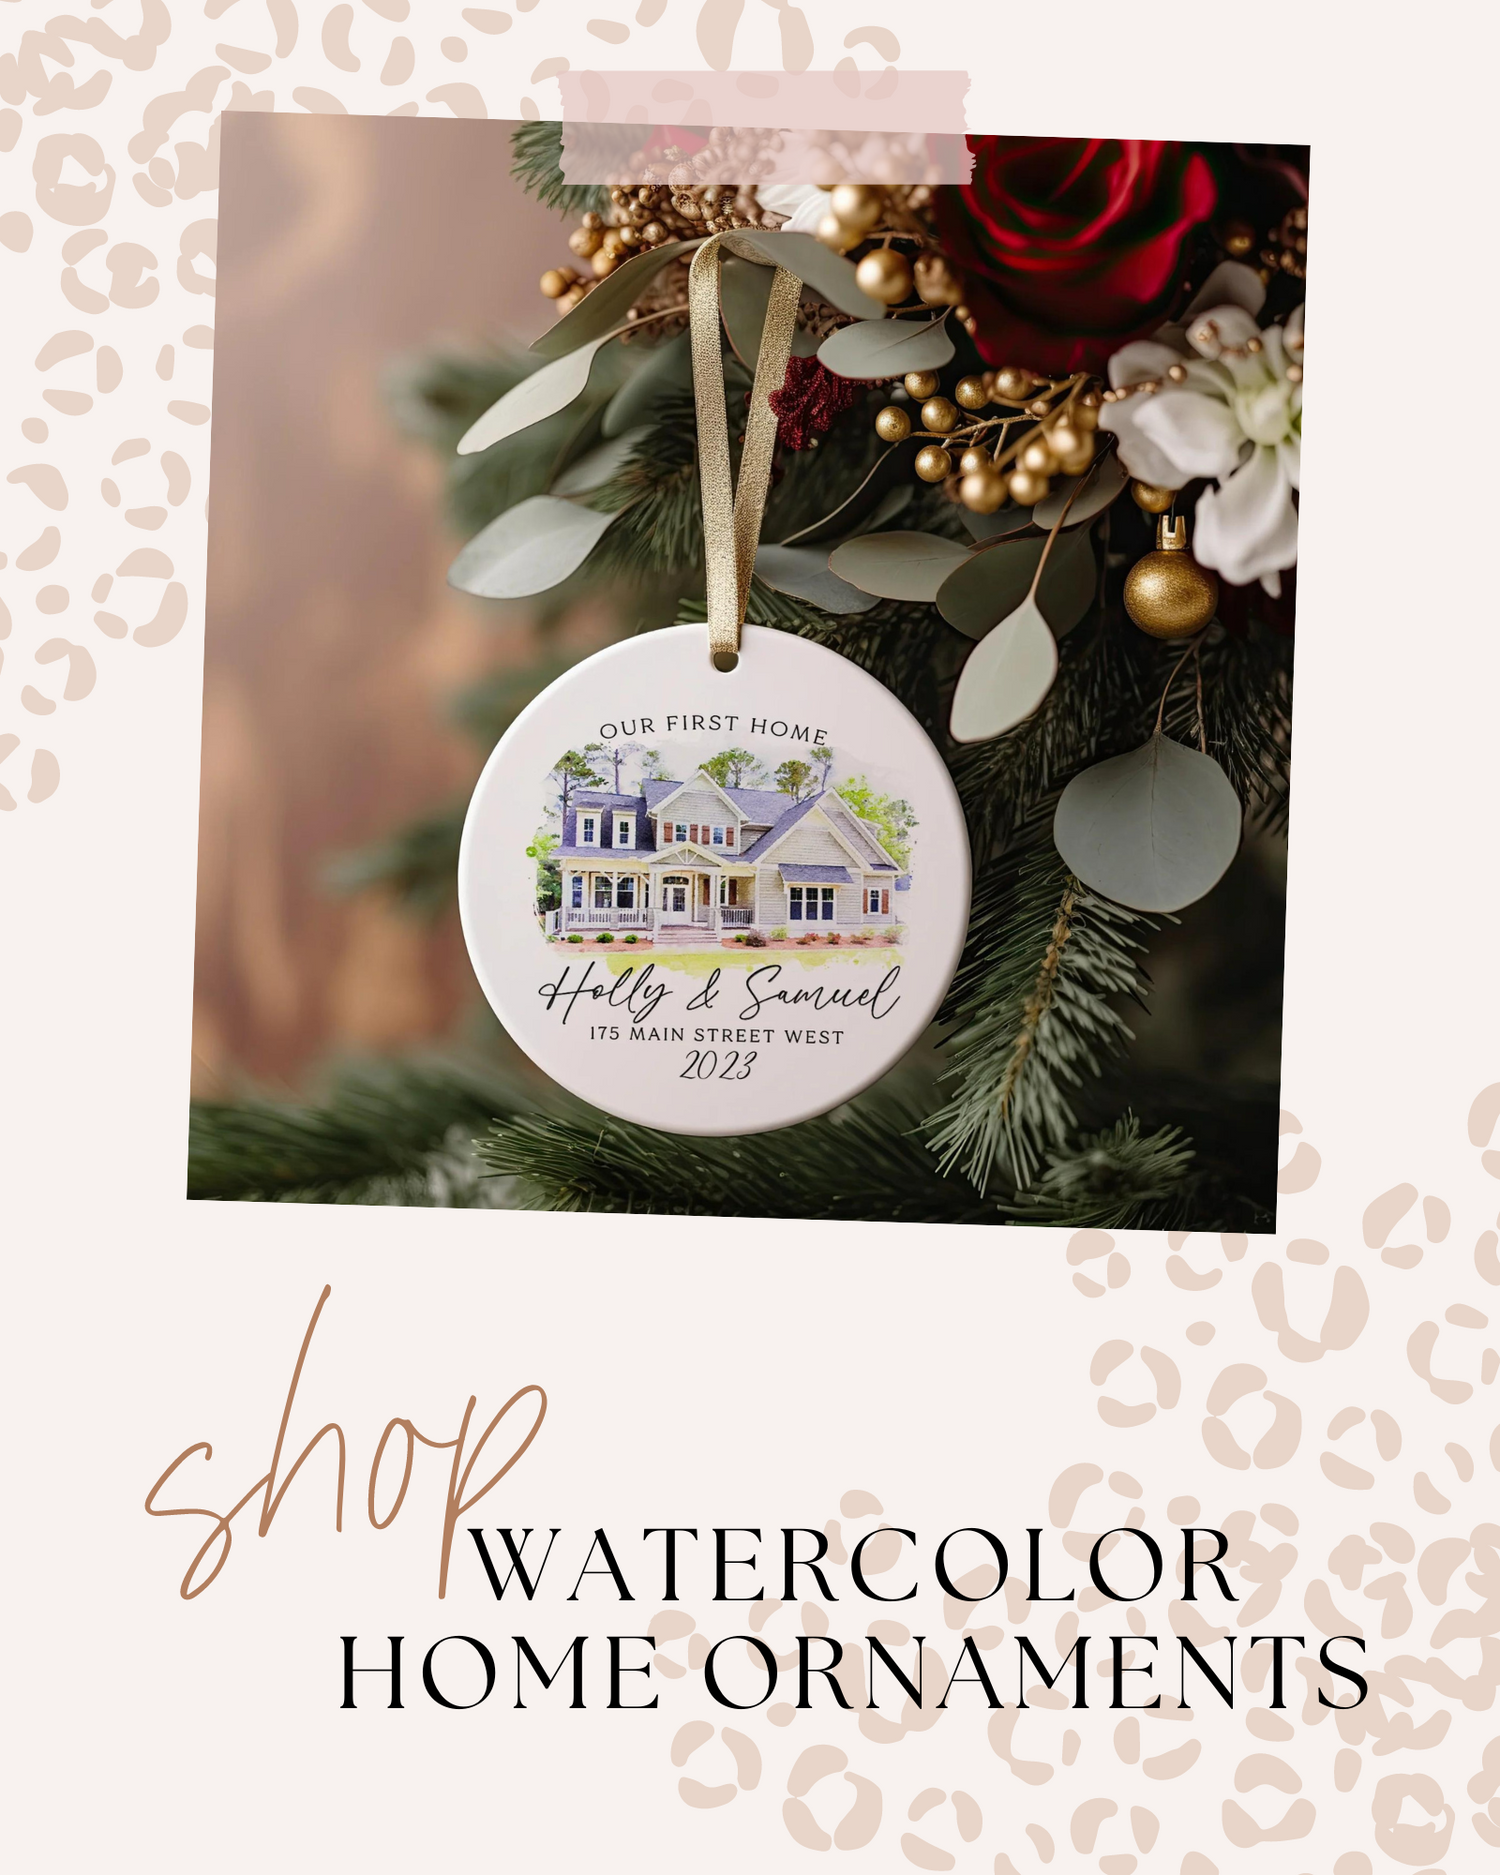 Watercolor Home Ornaments